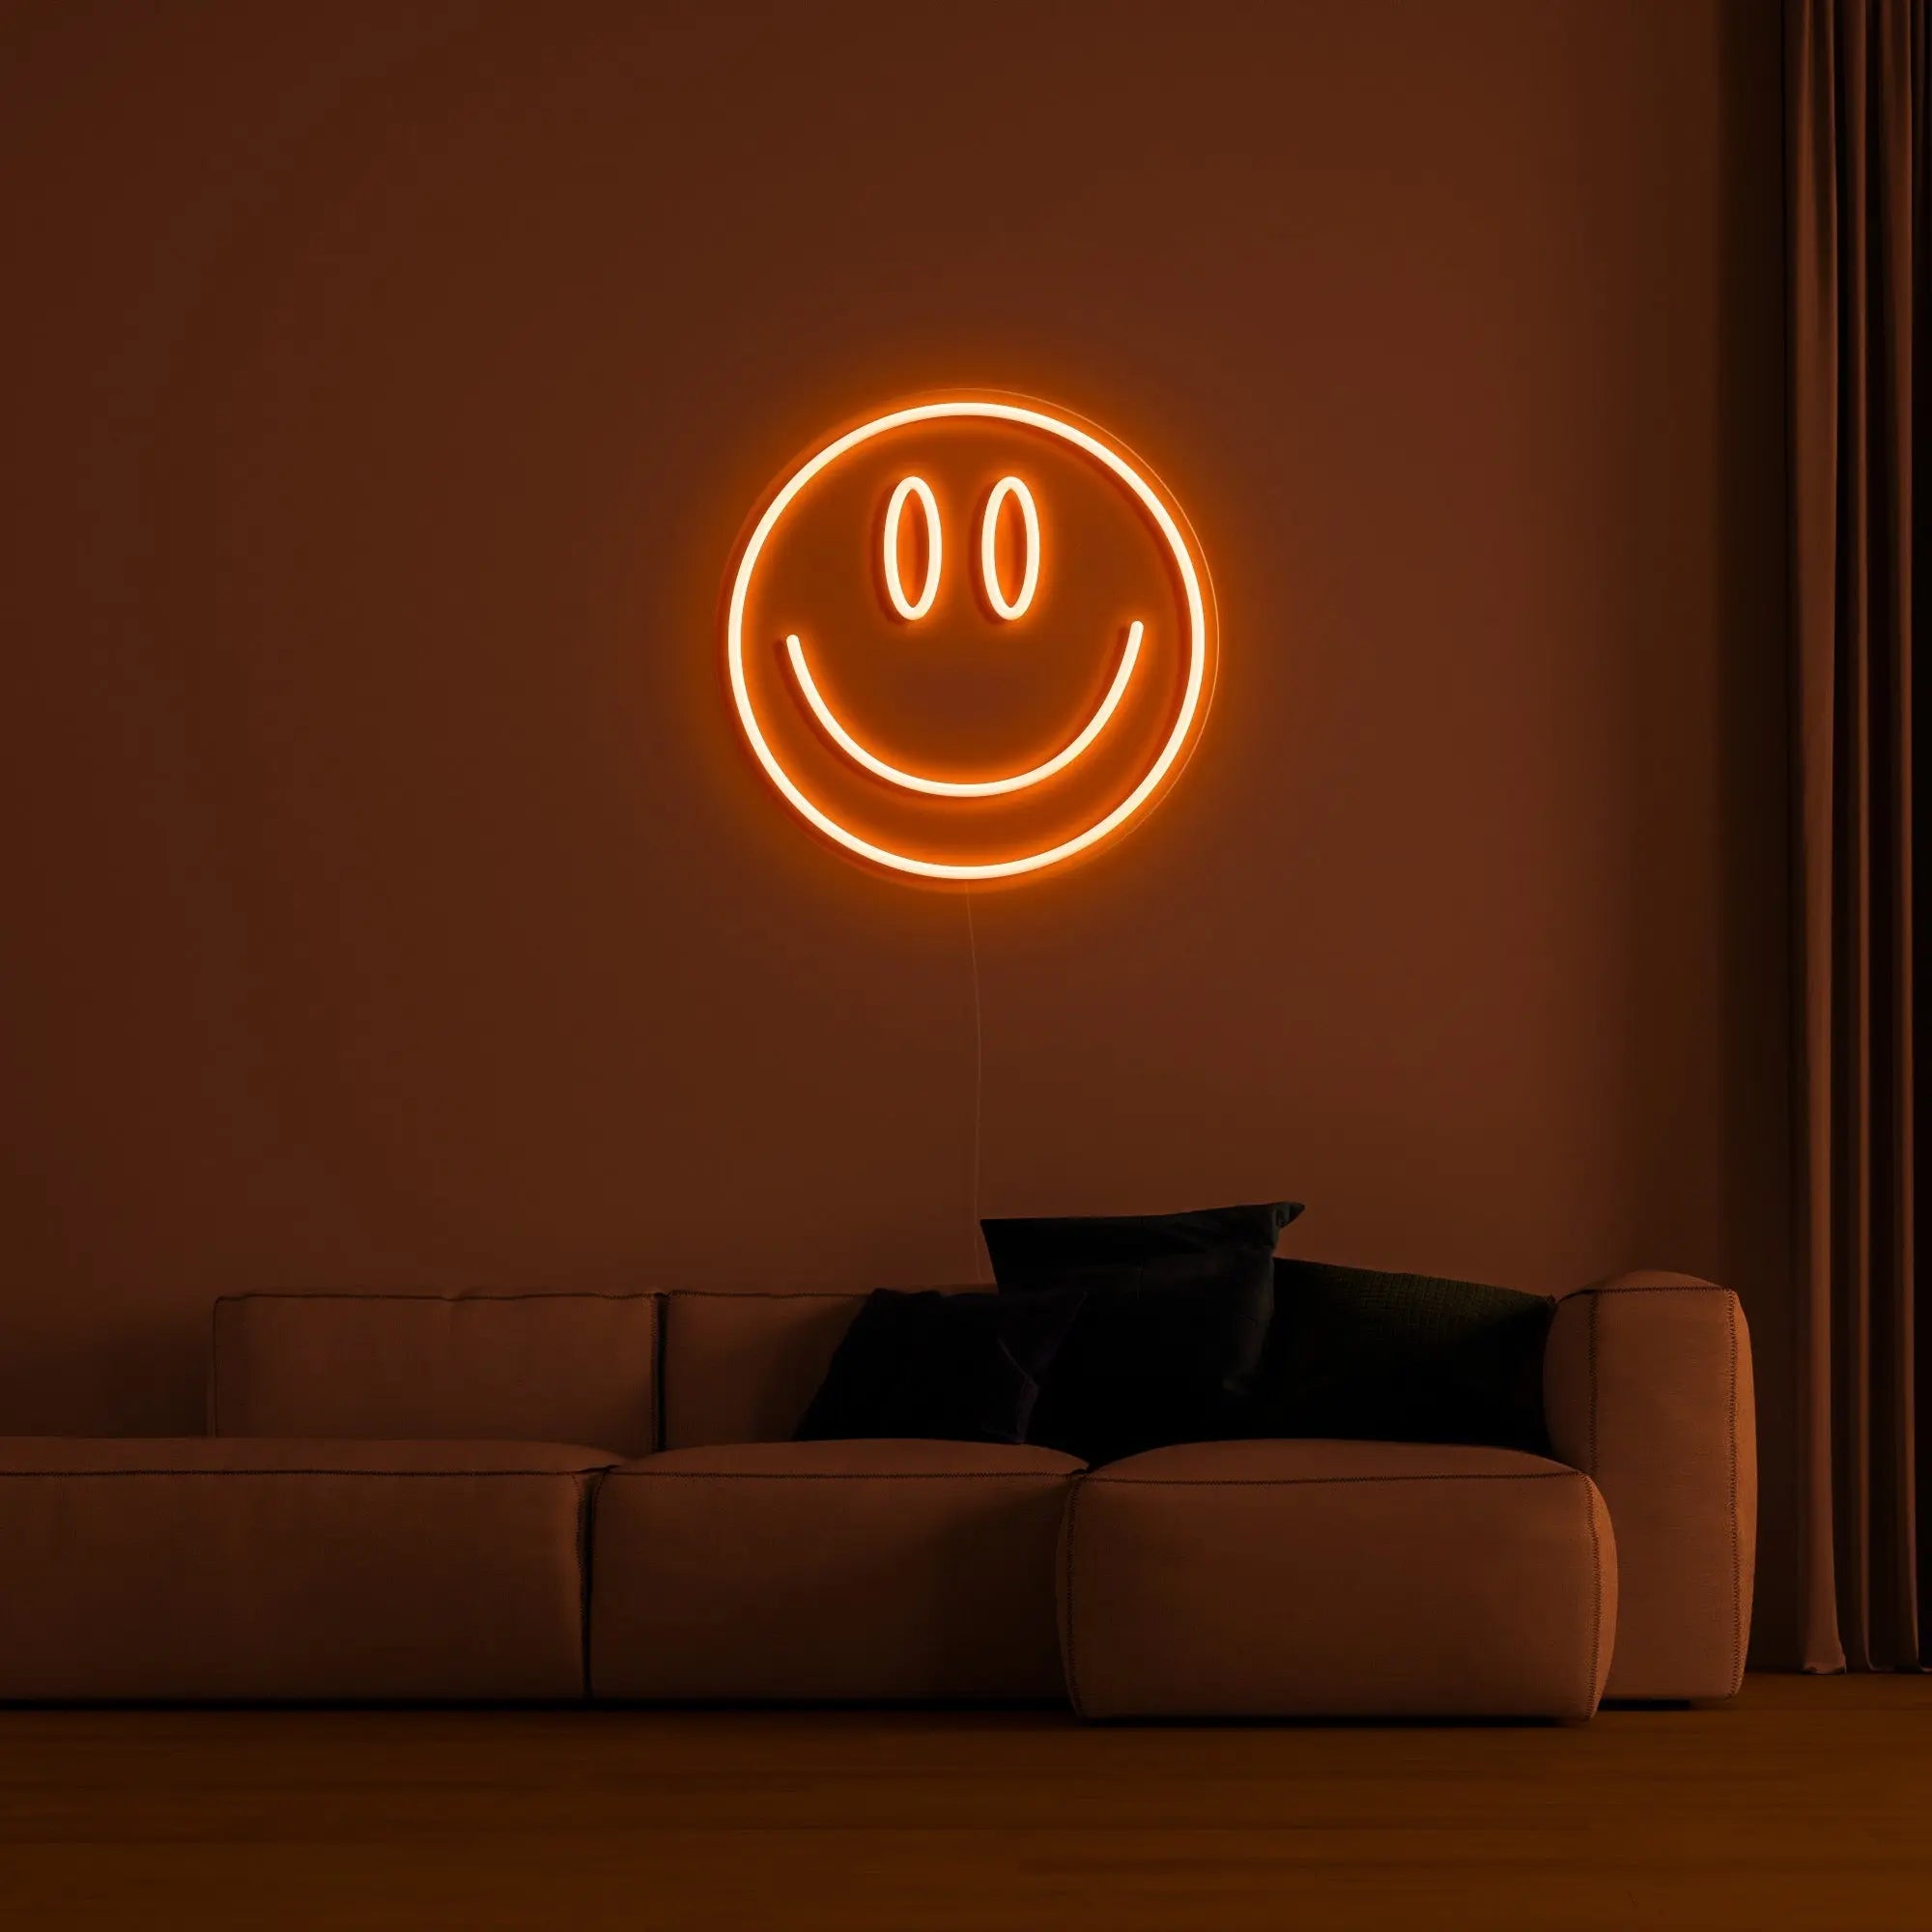 Smiley LED Neon Sign - neonaffair